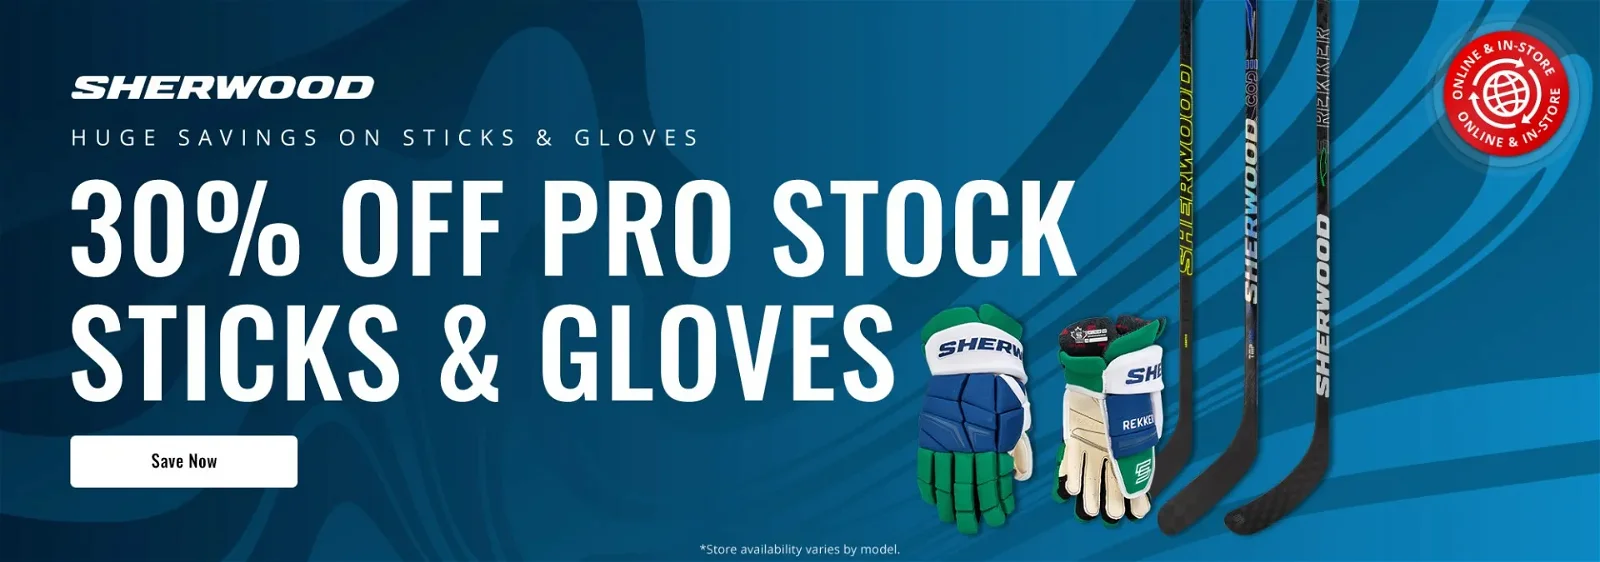 SherWood Pro Stock Sticks & Gloves | Now 30% off